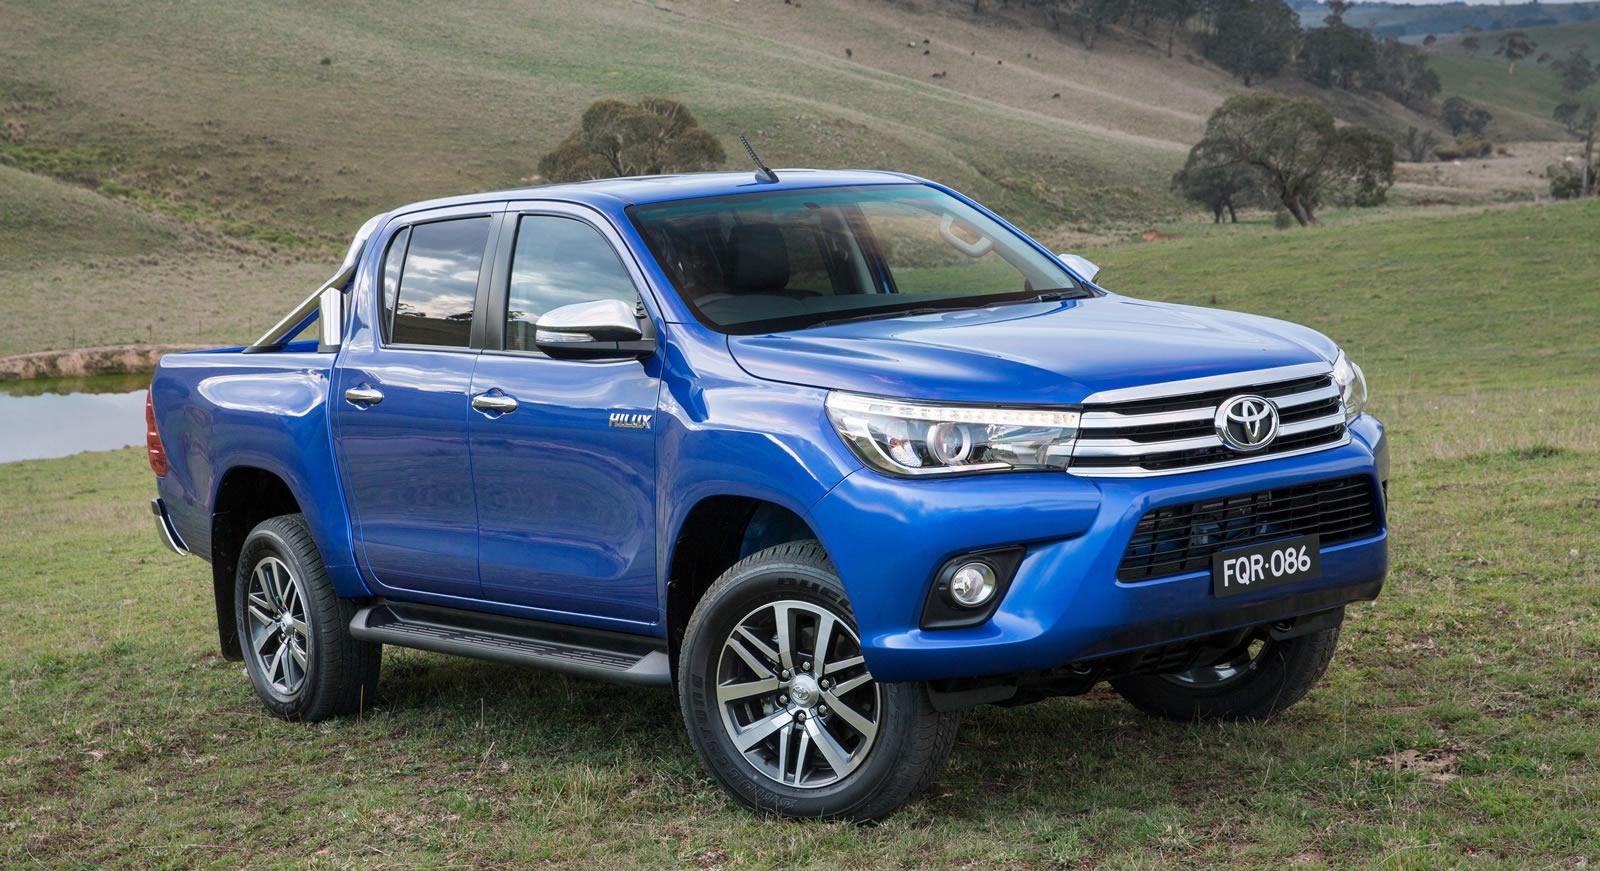 Toyota Hilux 2016, por fin es oficial